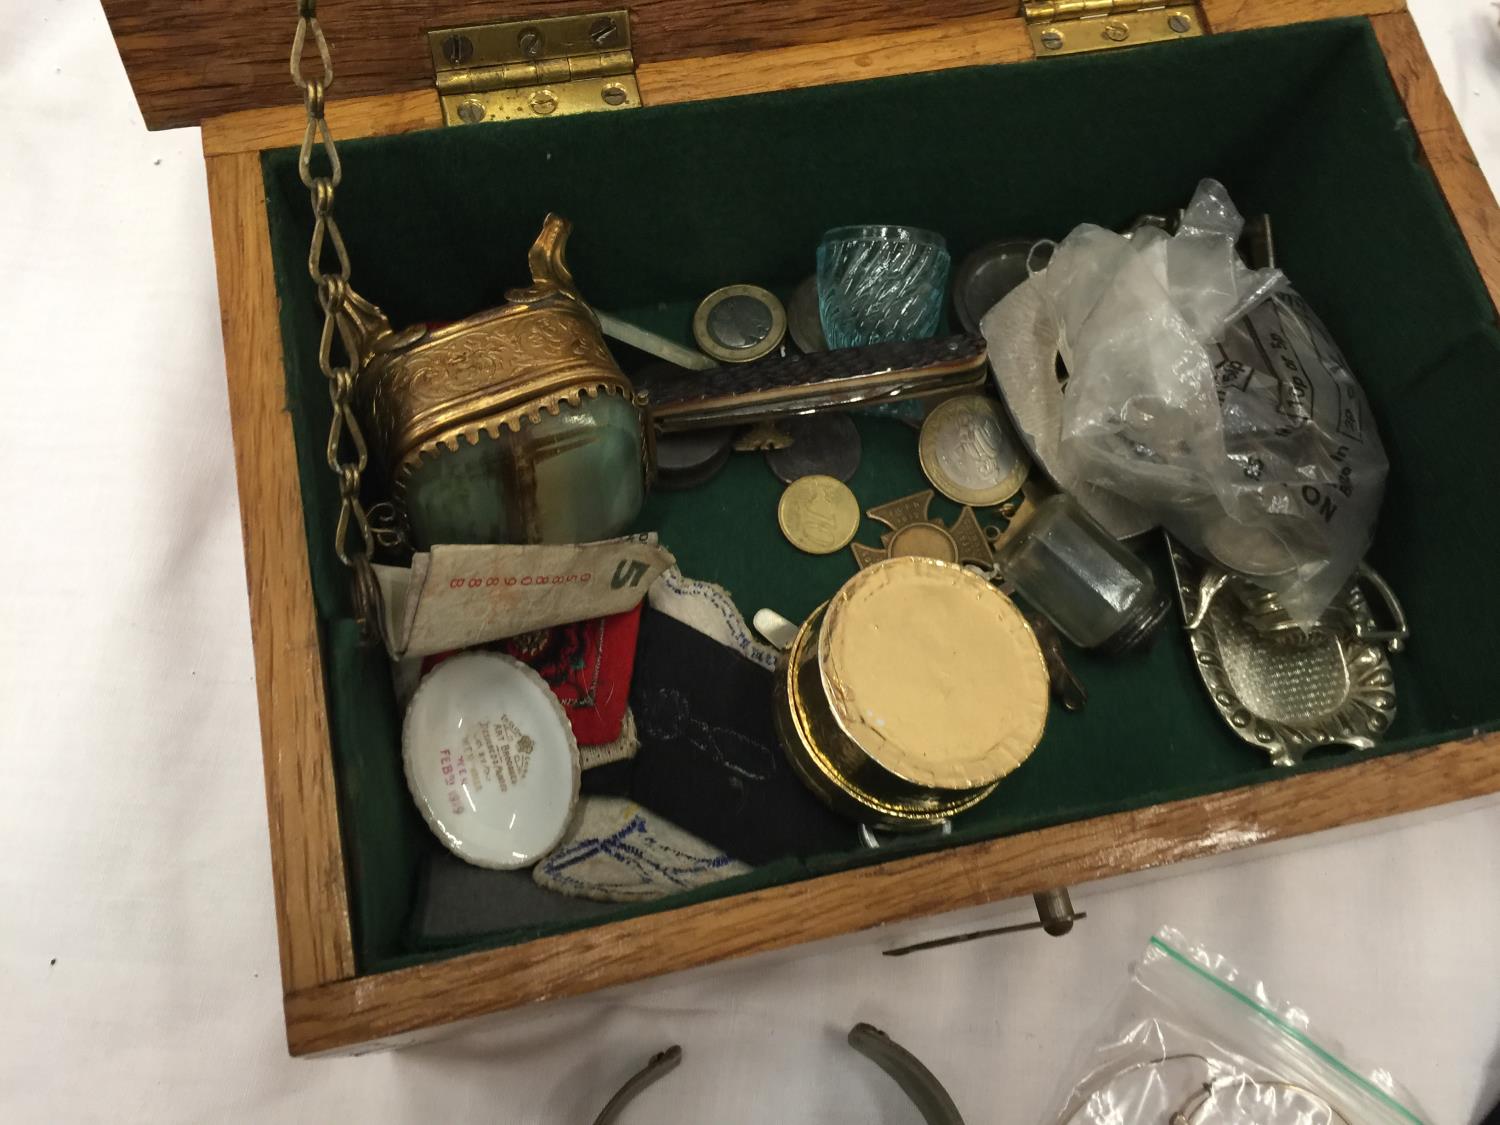 AN OAK BOX WITH A MILITARY EMBLEM CONTAINING MEDALS, BADGES, COINS, PEN KNIFE, LIGHTERS, ETC - Bild 4 aus 10